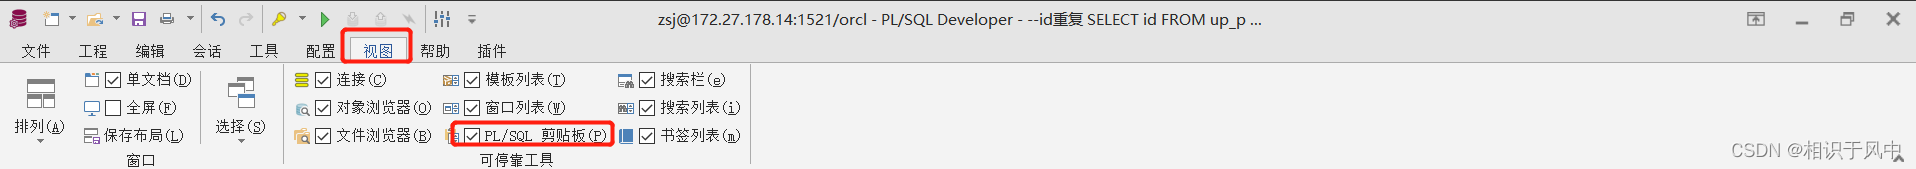 PLSQL DEVELOPER 右侧工具栏剪贴板不见了怎么显示